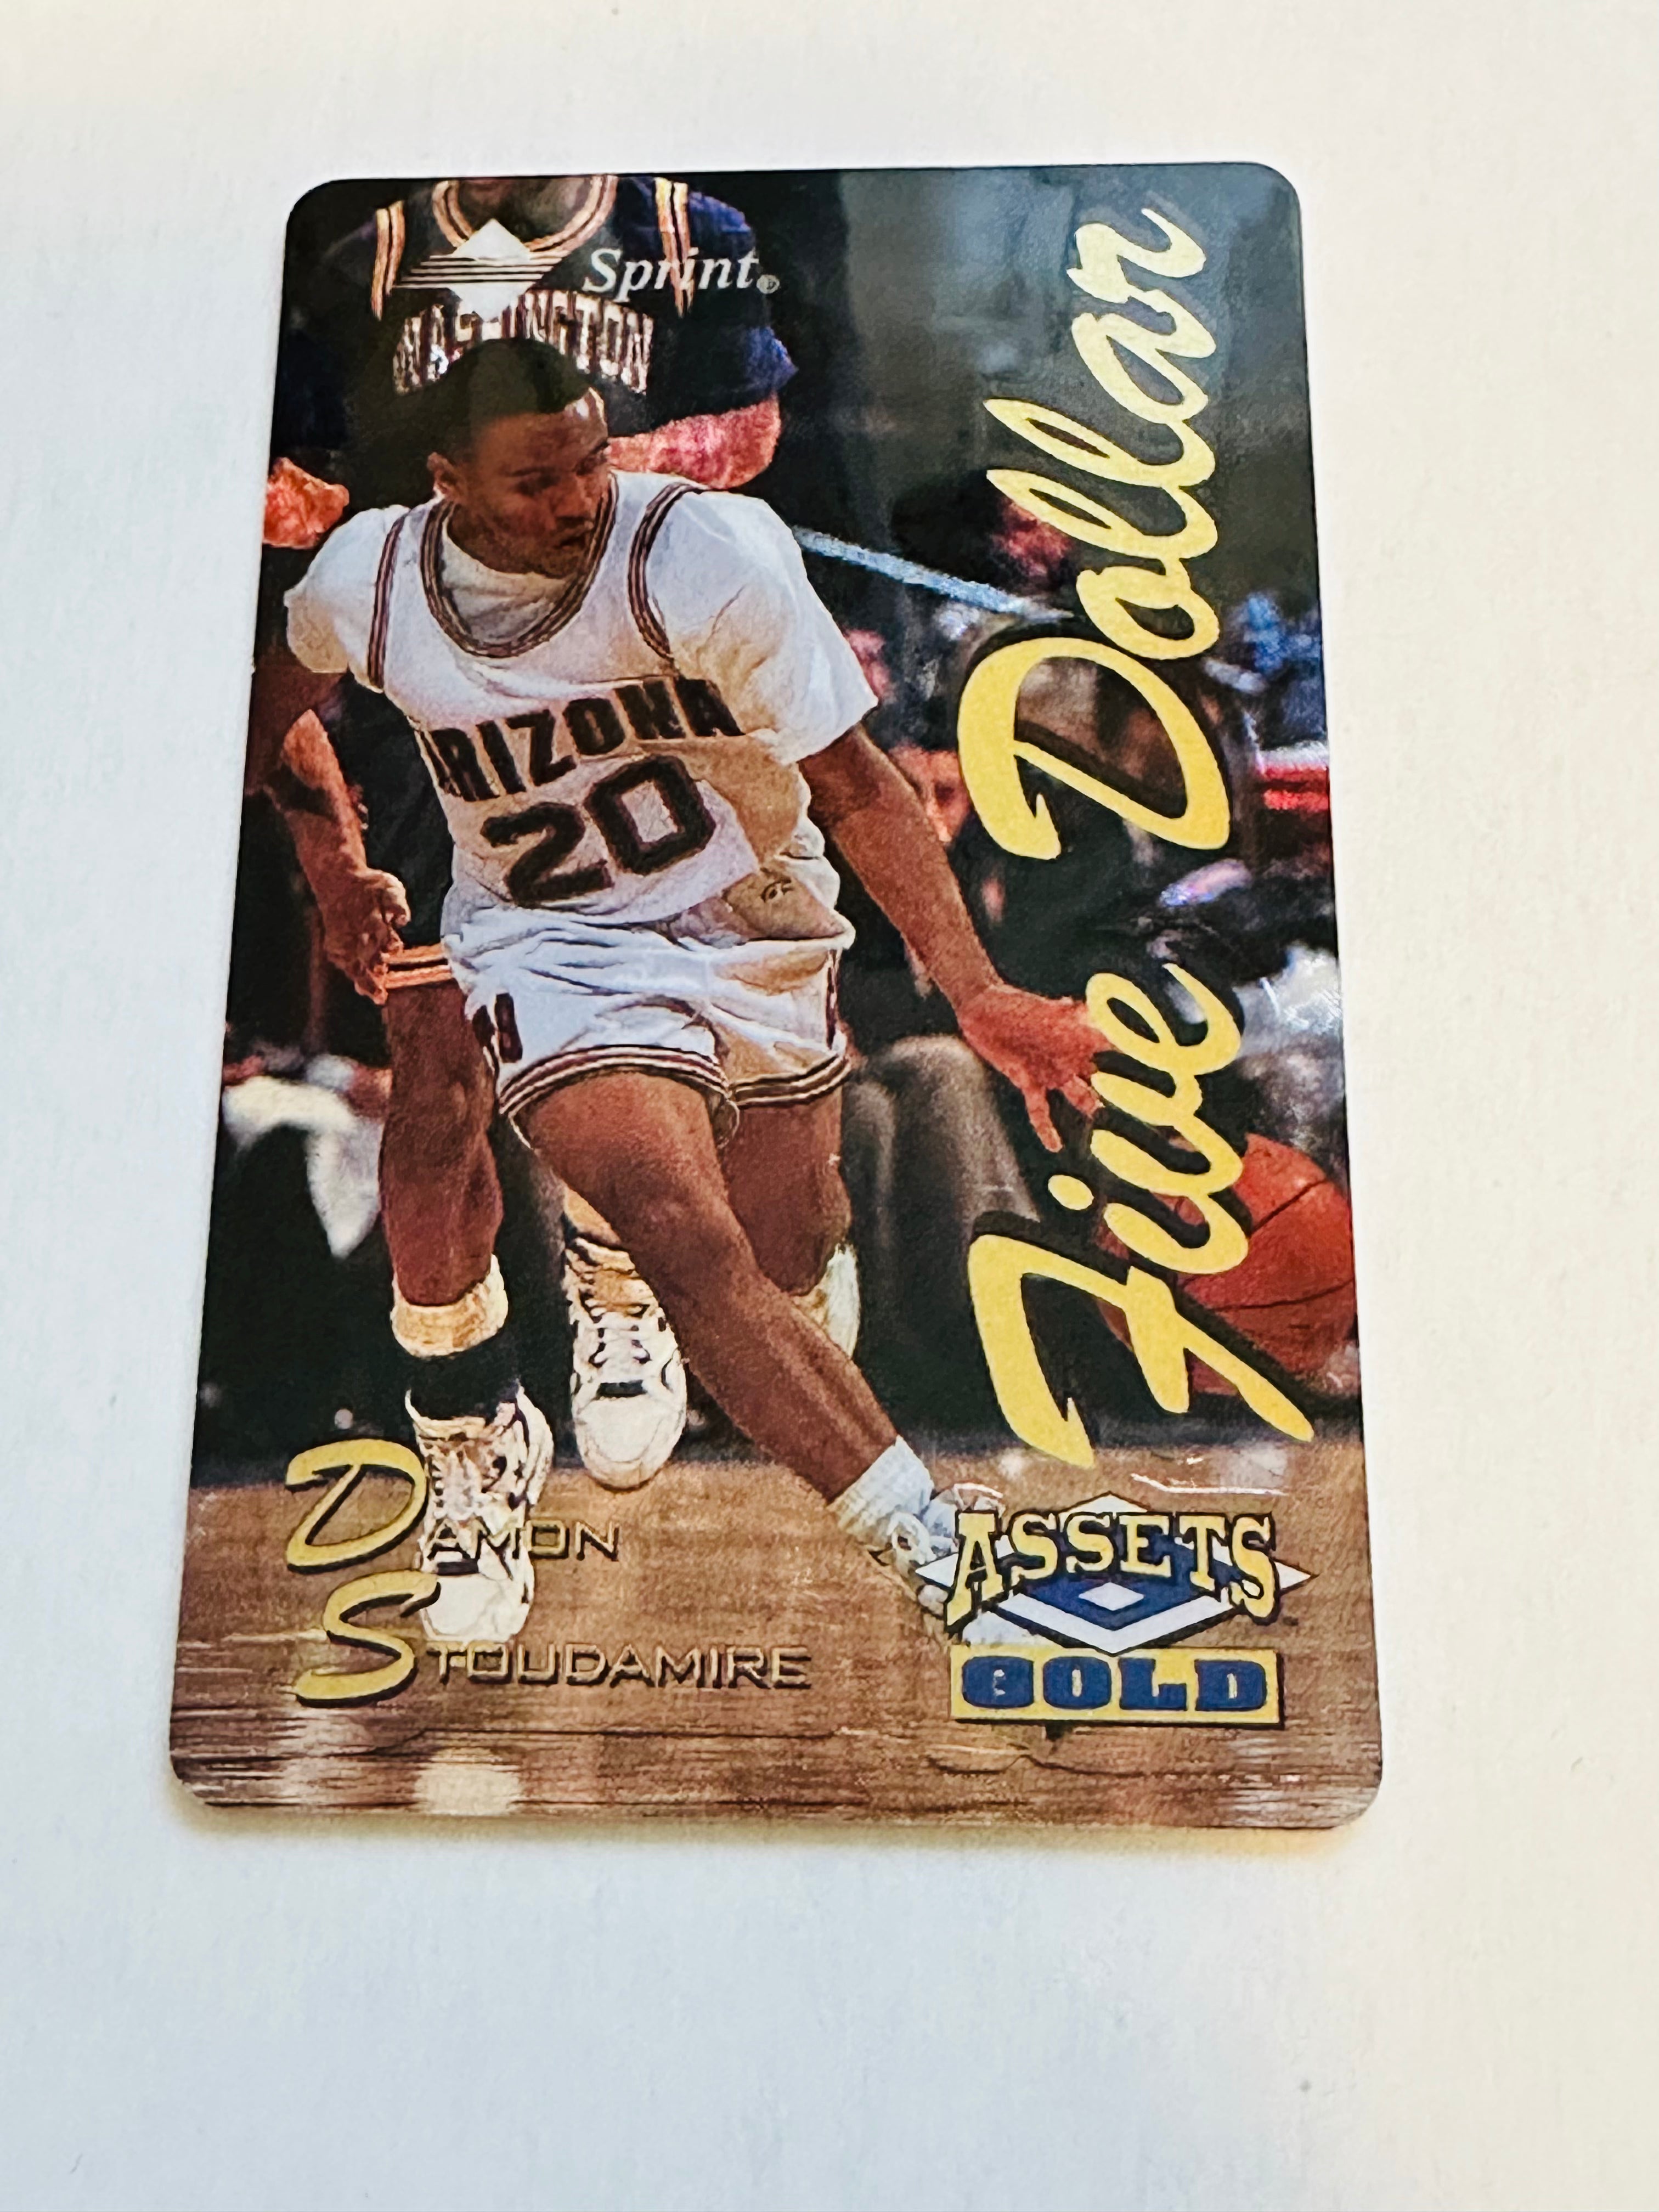 Toronto Raptors legend Damon stoudamire rare rookie basketball phone card 1995